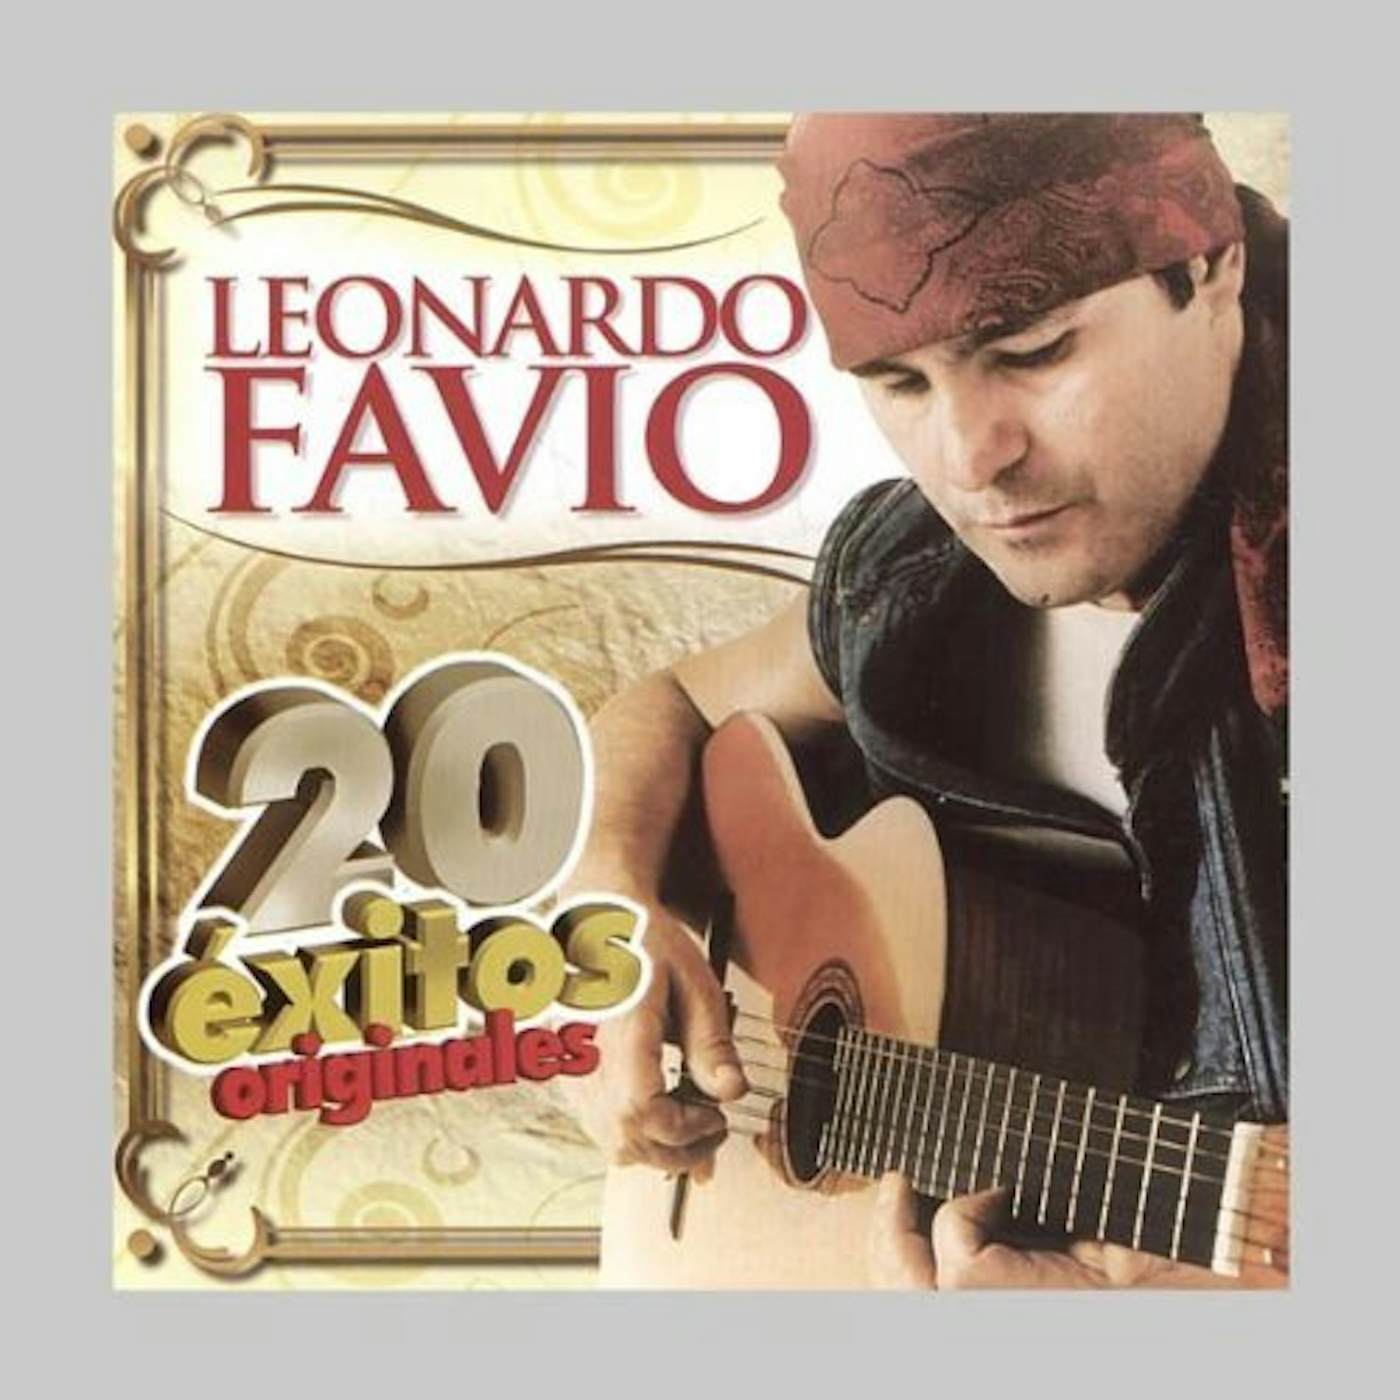 Leonardo Favio 20 EXITOS ORIGINALES CD